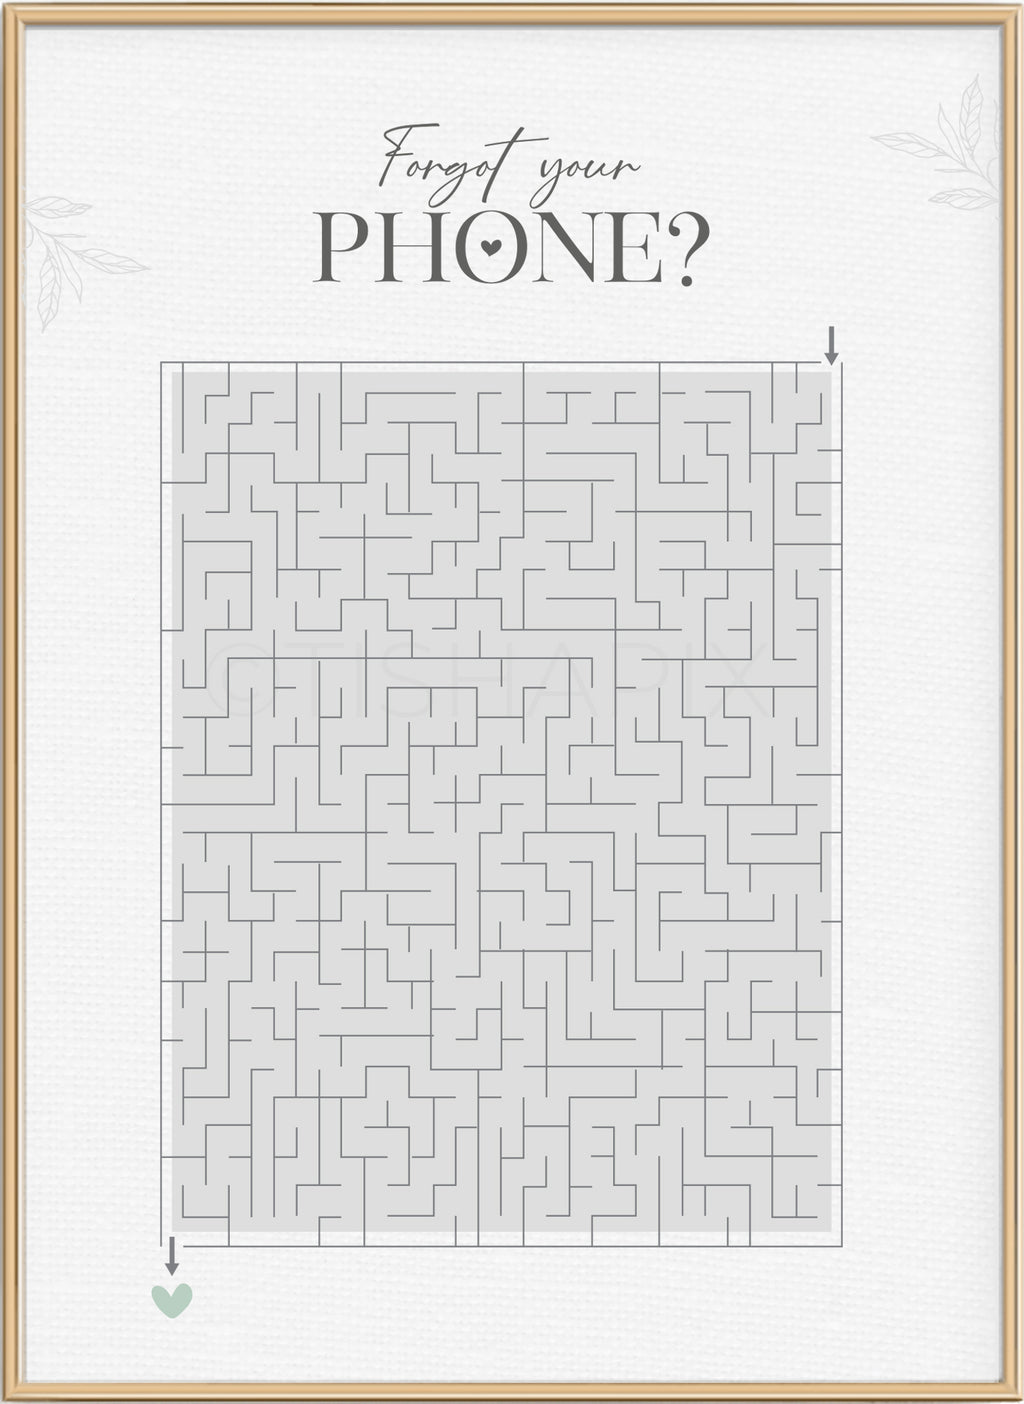 Forgot Your Phone? - Maze